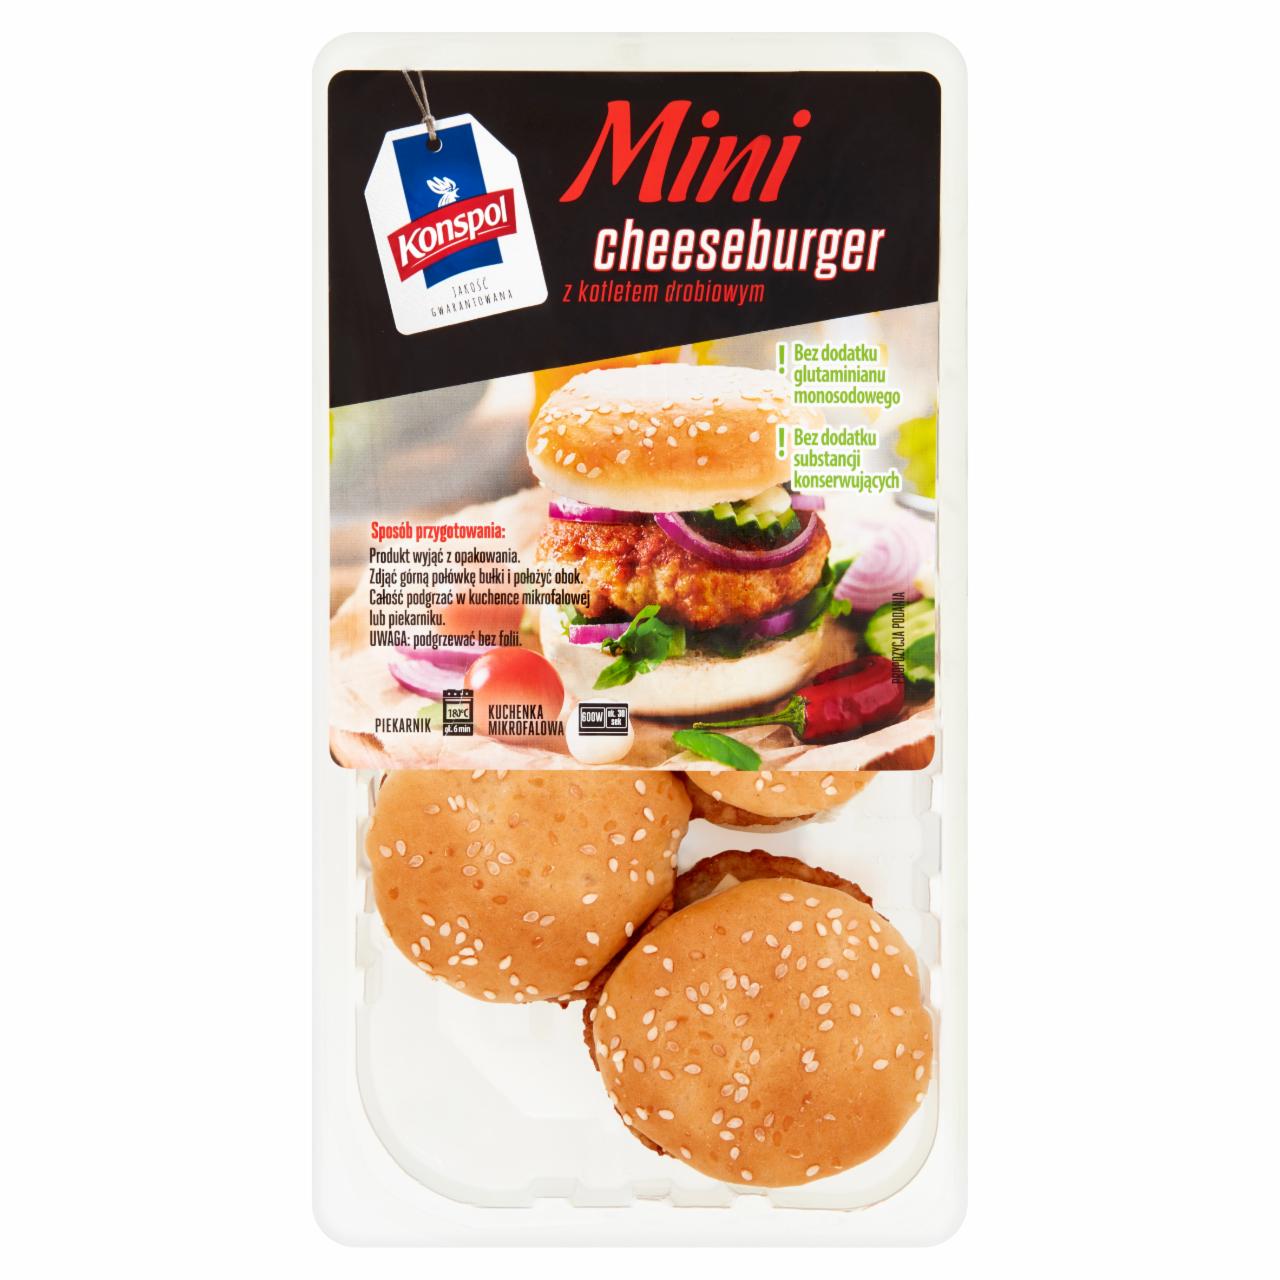 Zdjęcia - Konspol Mini cheeseburger z kotletem drobiowym 245 g